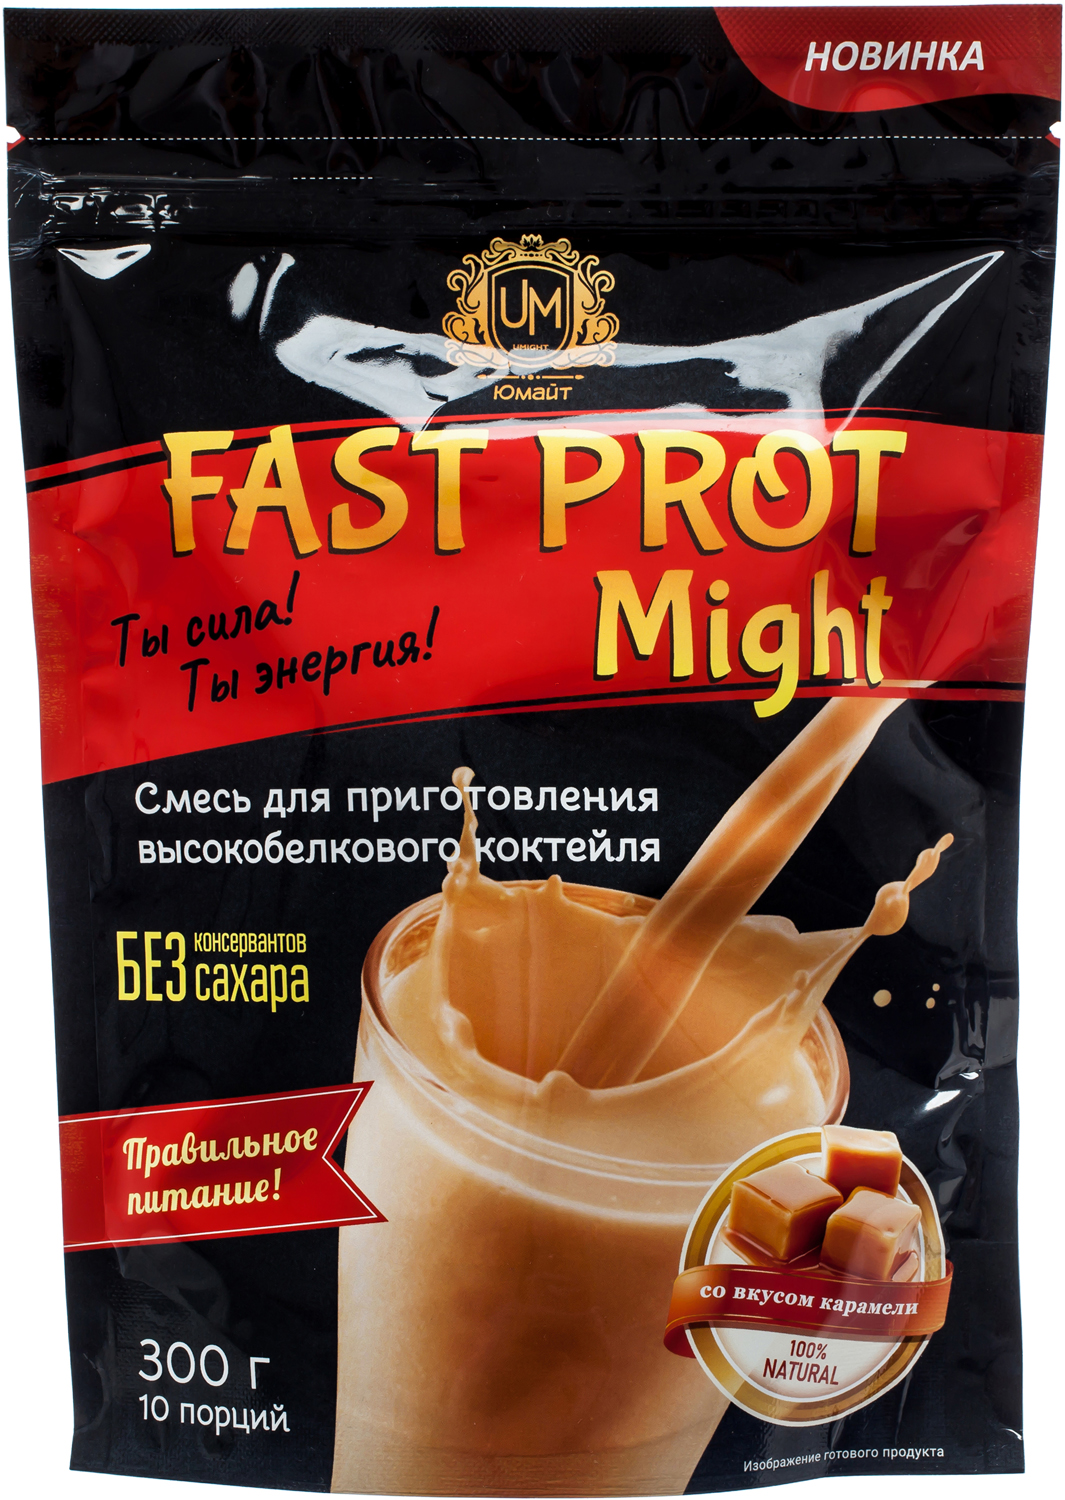 фото Протеиновый коктейль "fast prot might" со вкусом карамели, 300г ооо "юмайт"